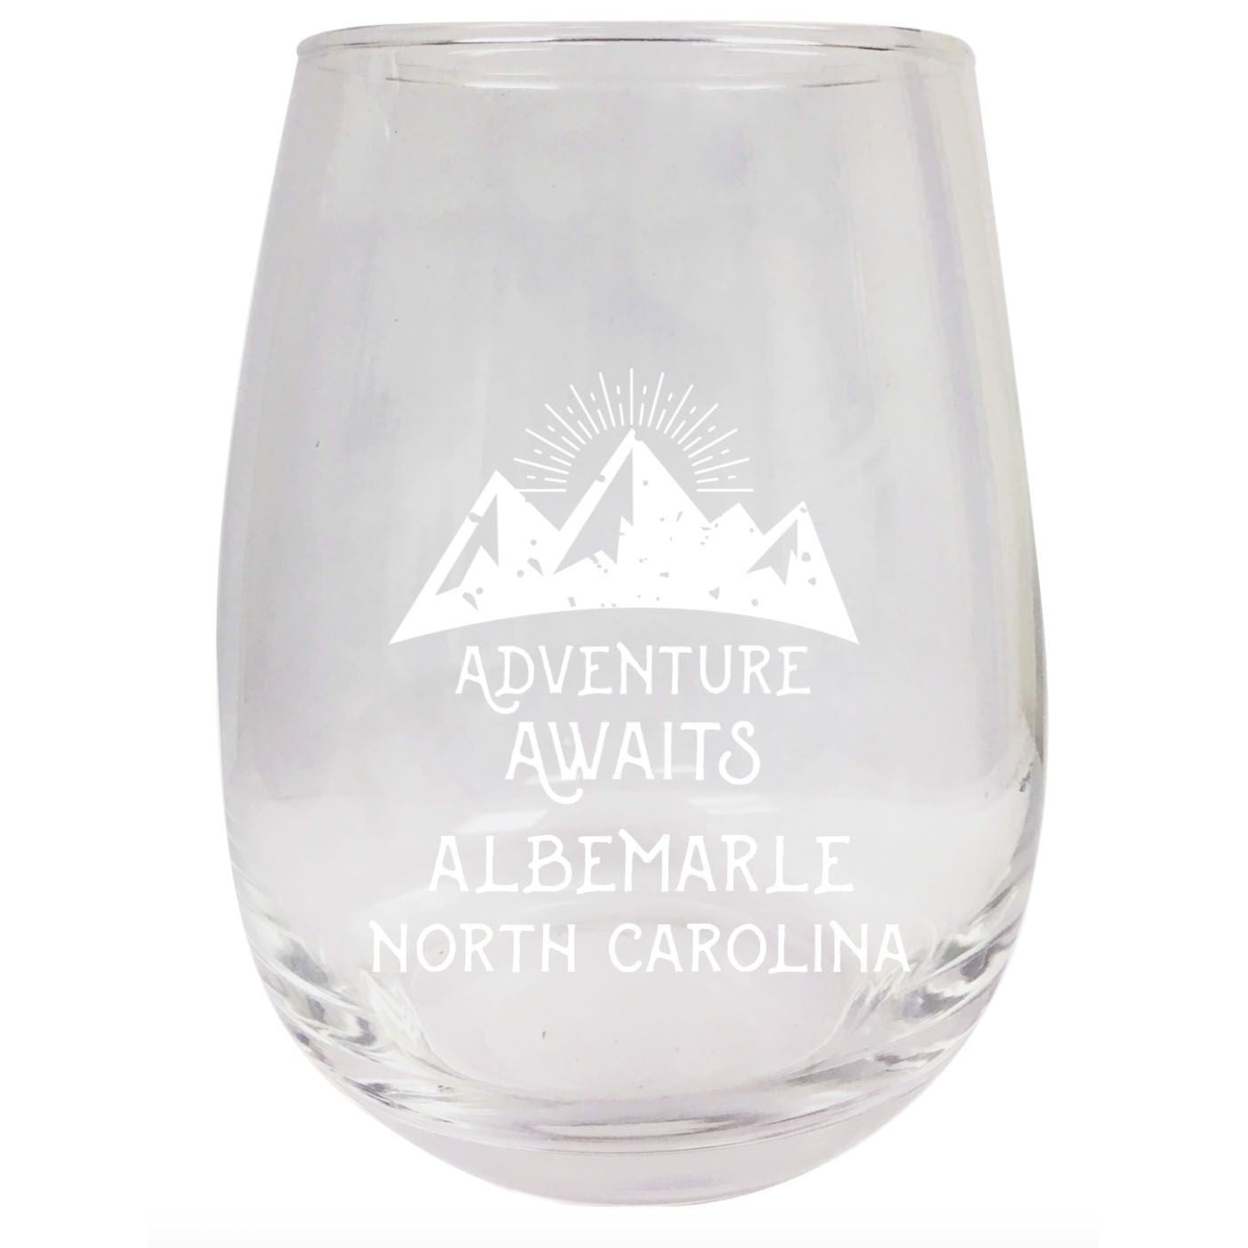 North Carolina Engraved Stemless Wine Glass Duo